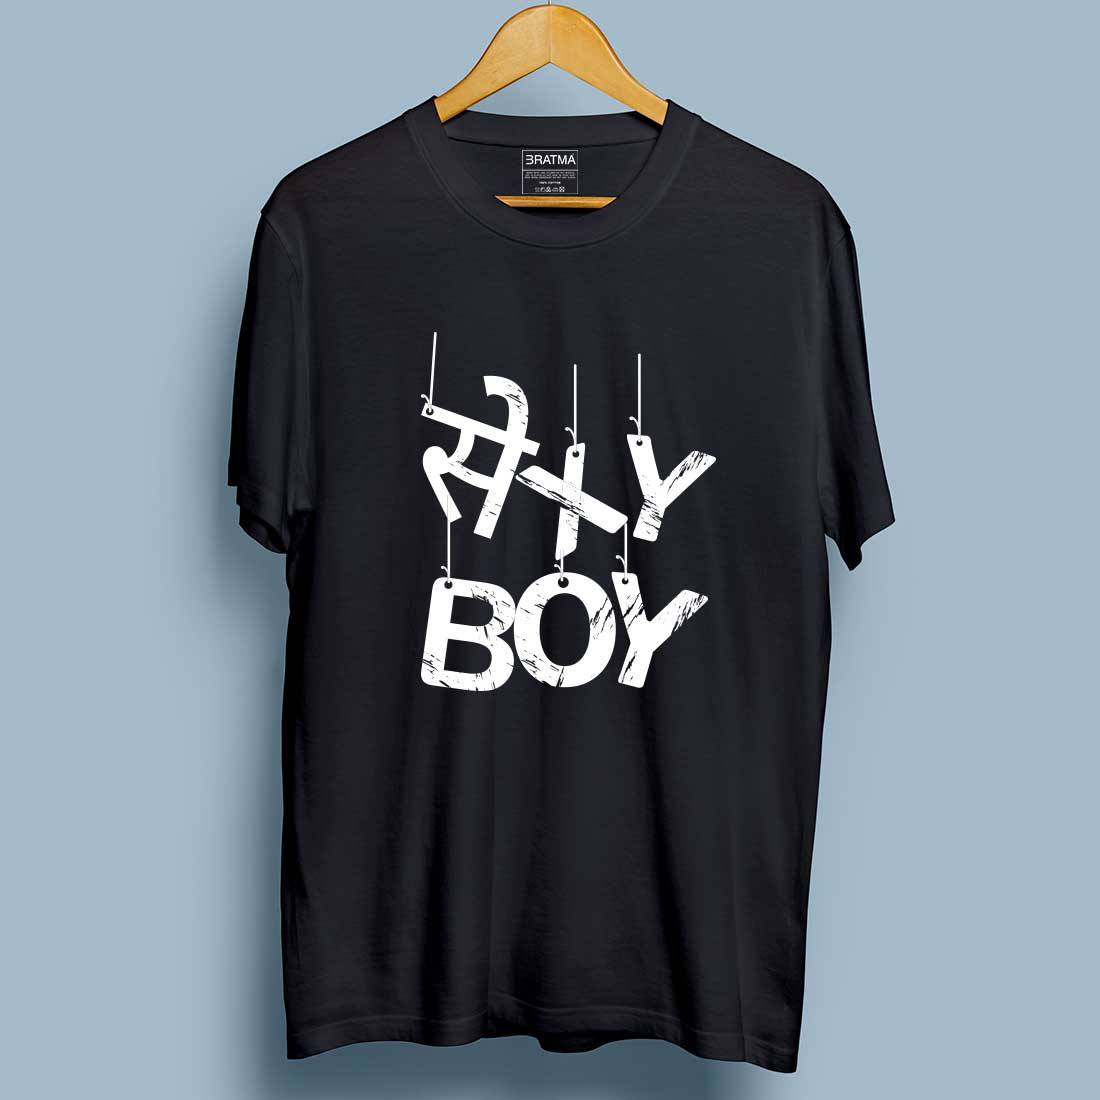 Sexy Boy Black Men T-Shirt